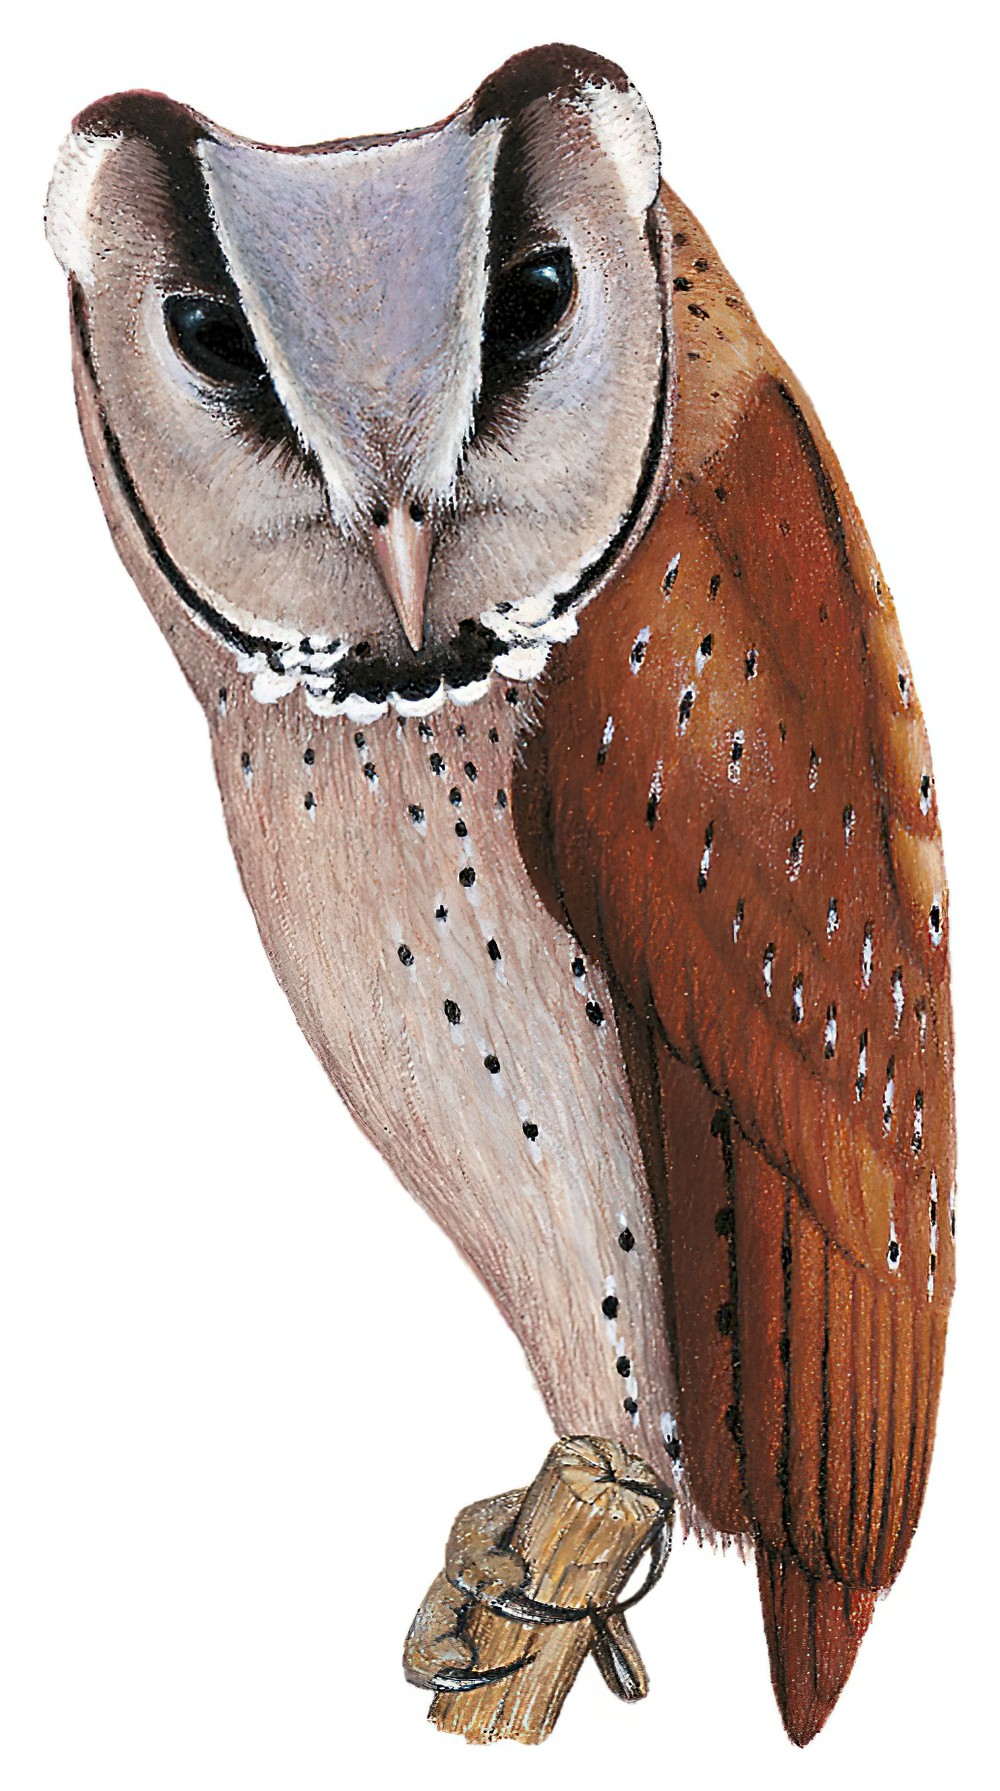 Oriental Bay-Owl / Phodilus badius